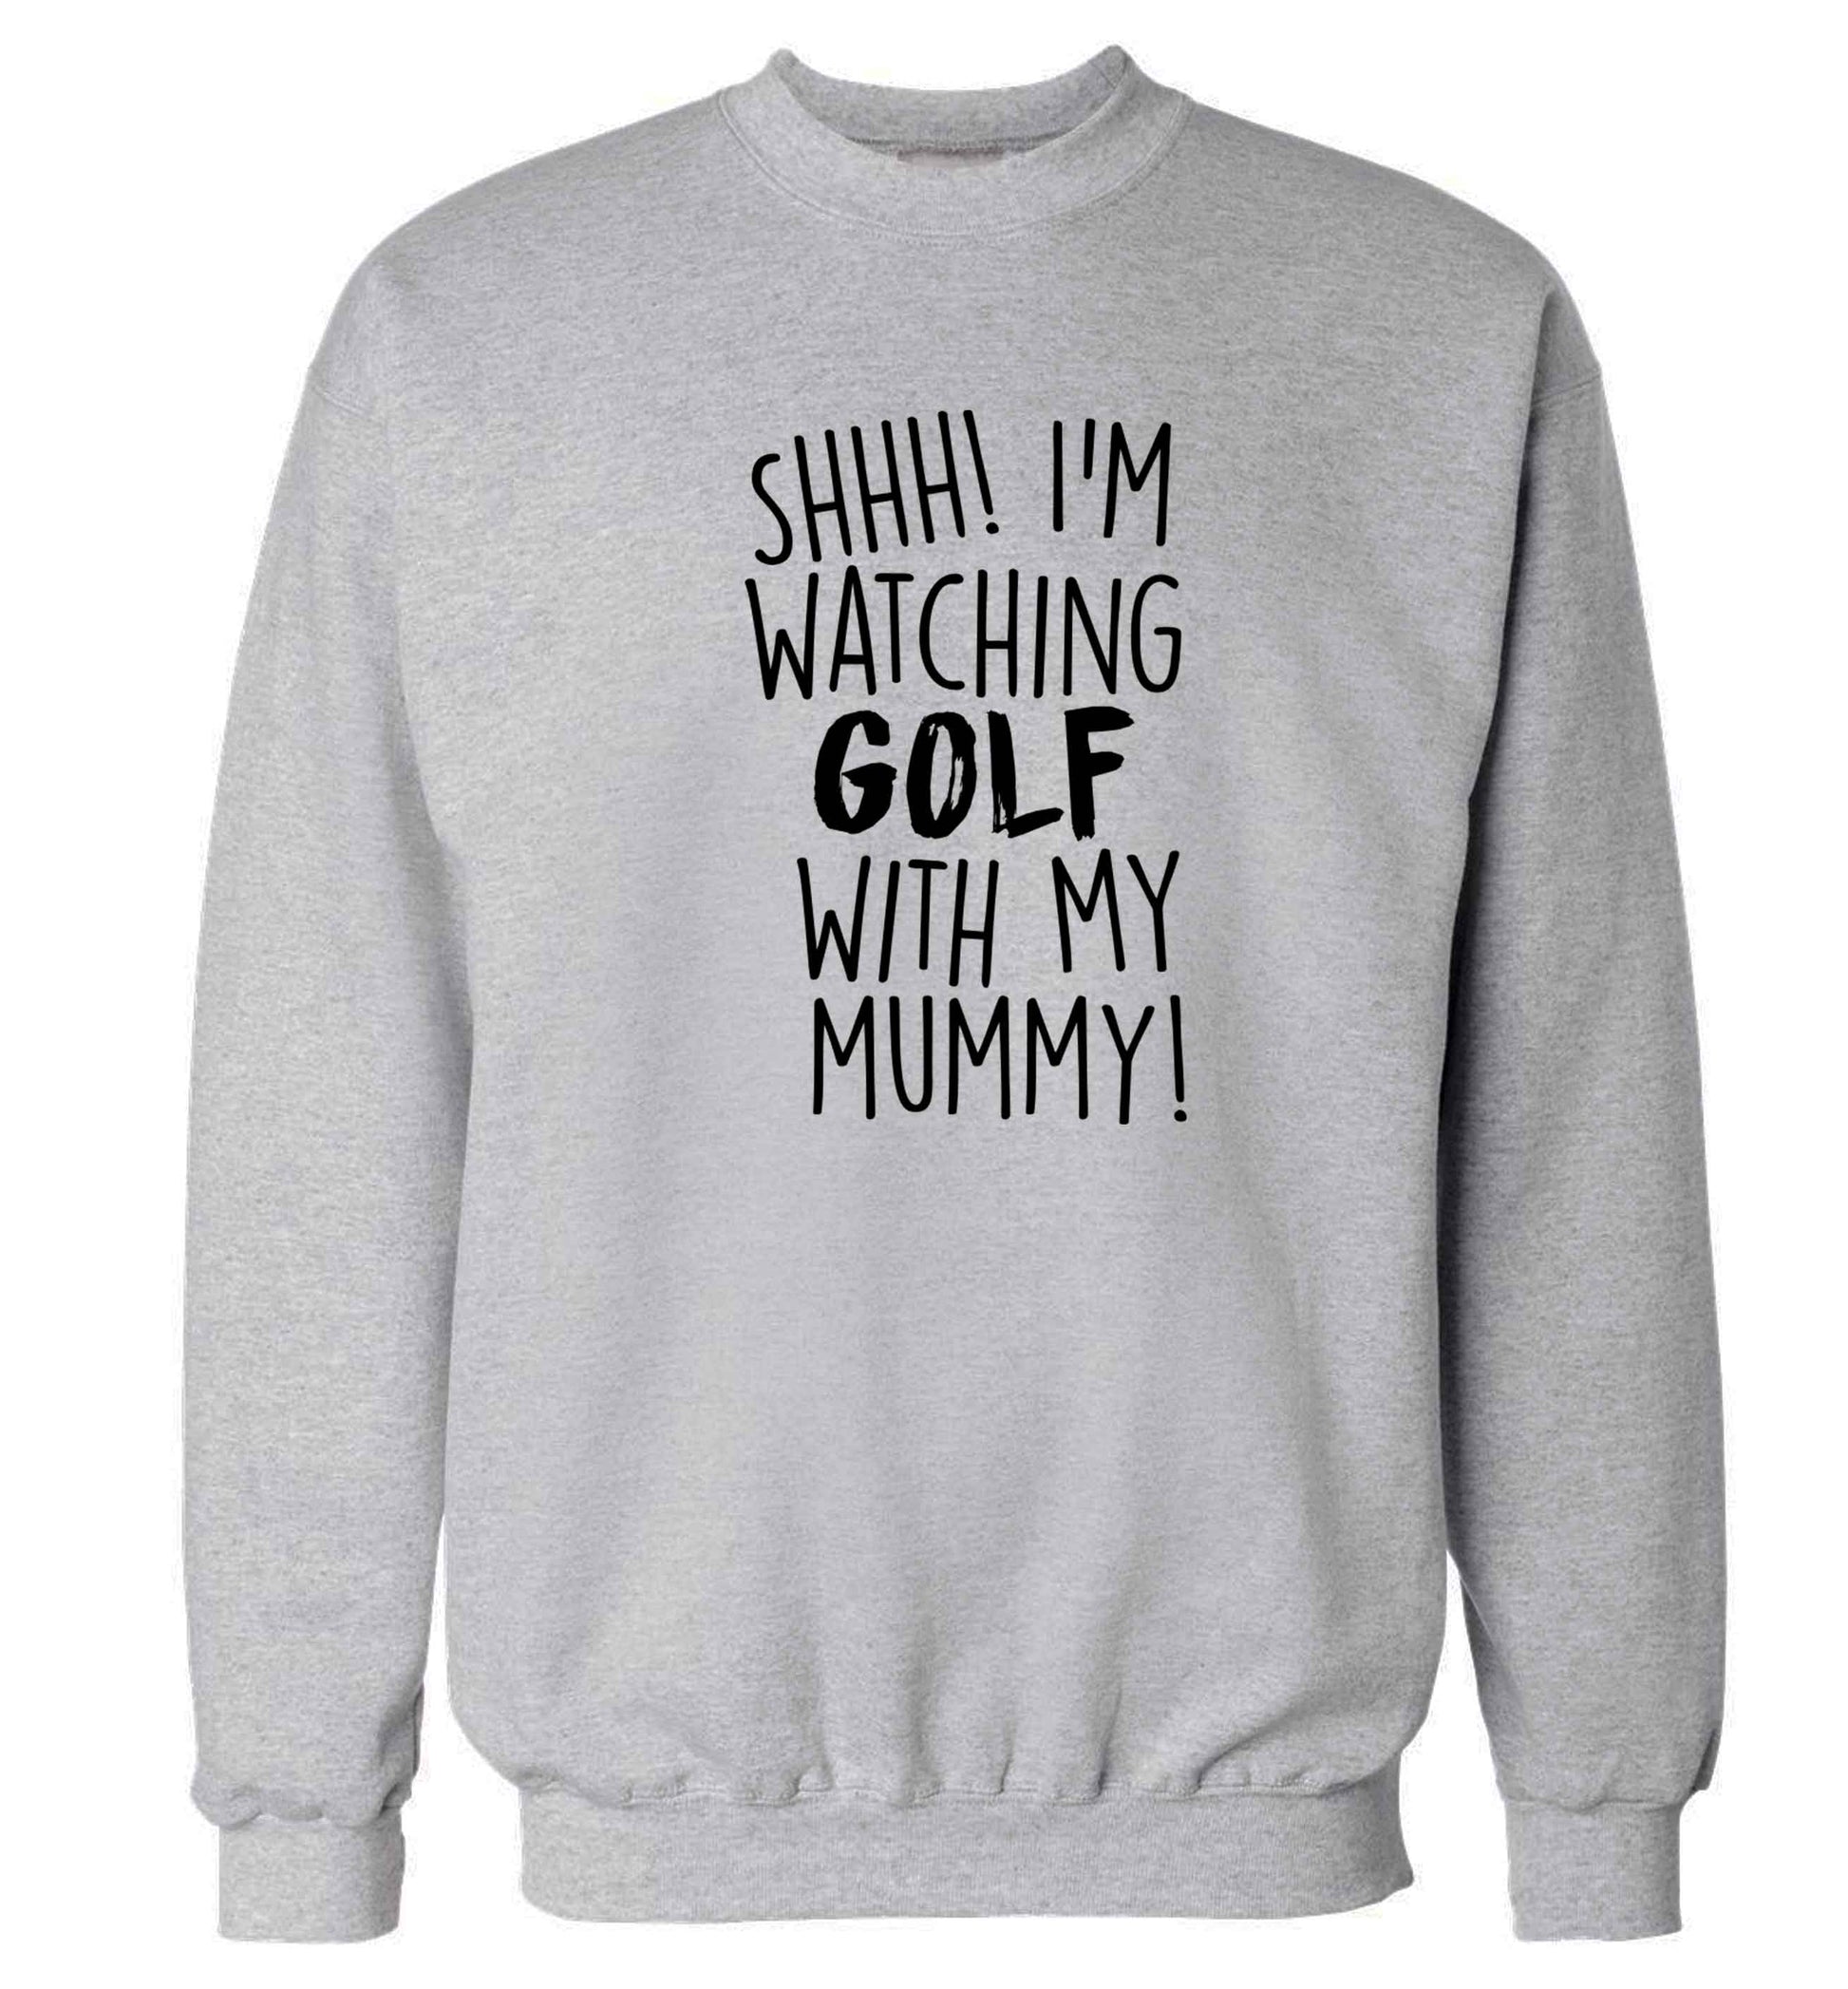 Shh I'm watching golf with my mummy Adult's unisex grey Sweater 2XL